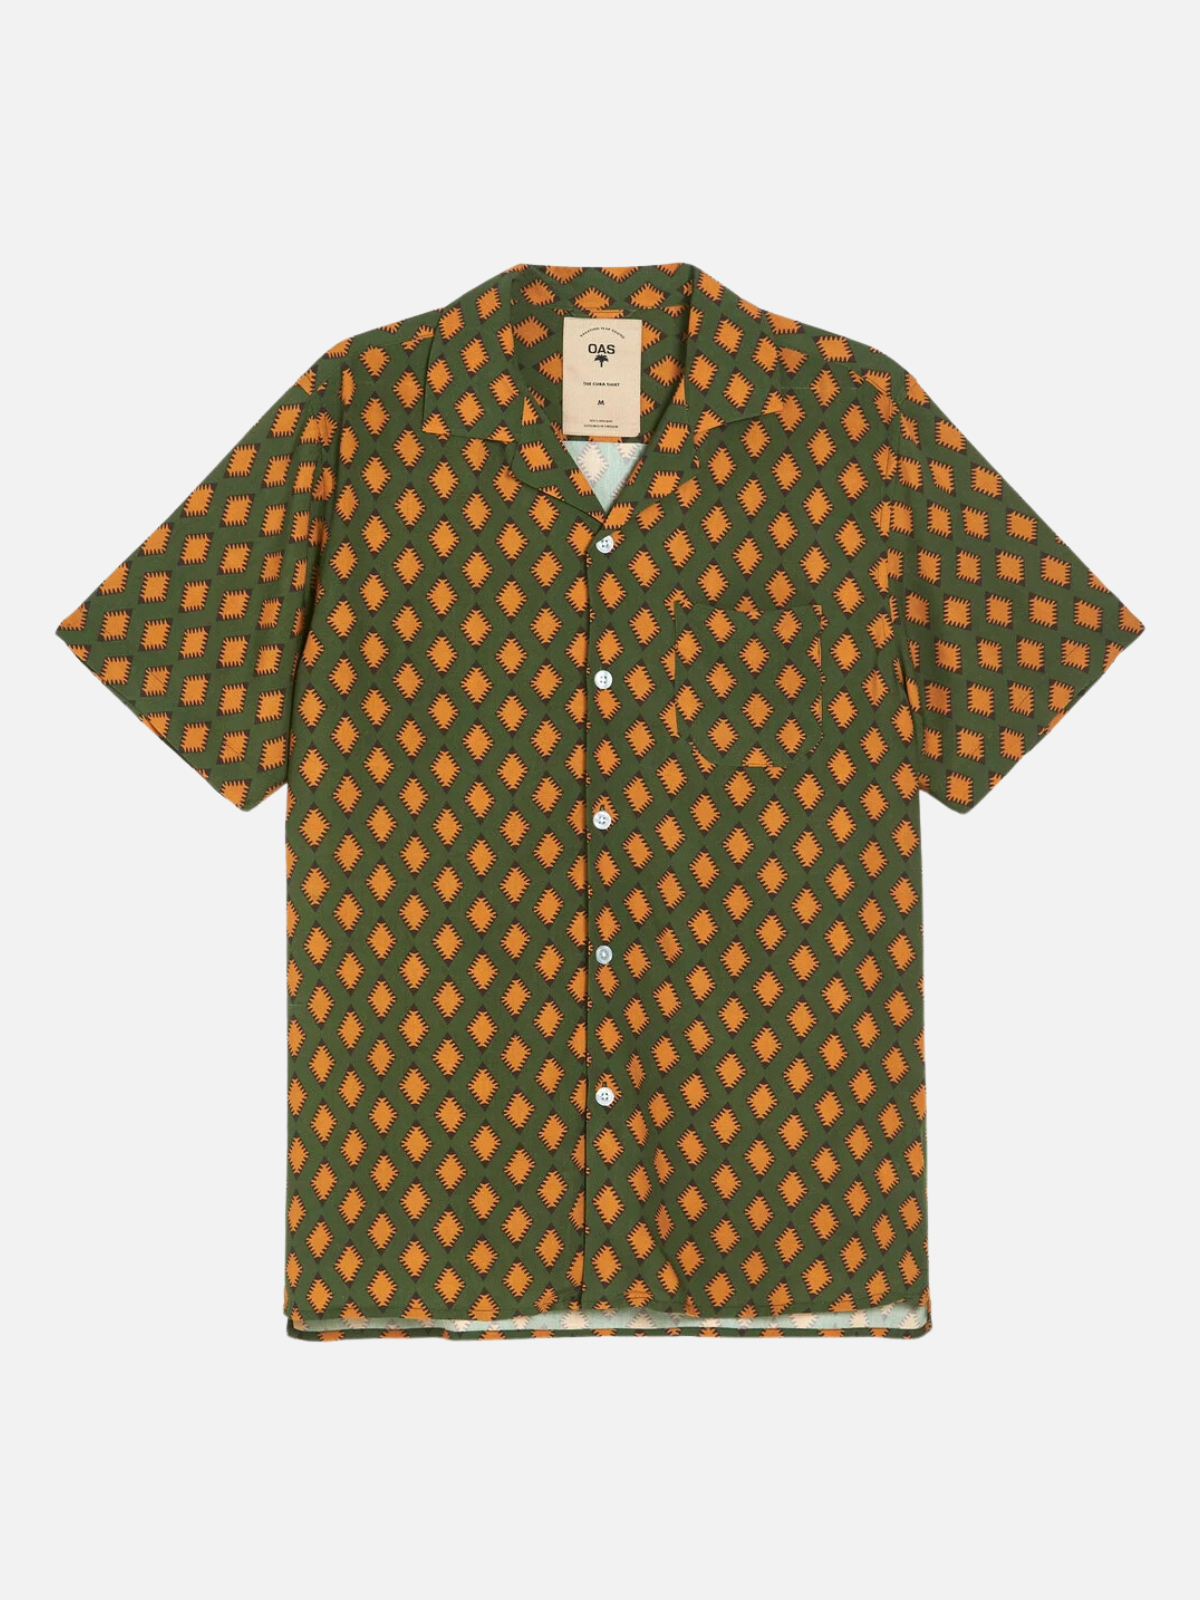 oas smokin rustic viscose ss short sleeve relaxed resort shirt green orange diamond pattern kempt athens ga georgia men's clothing store